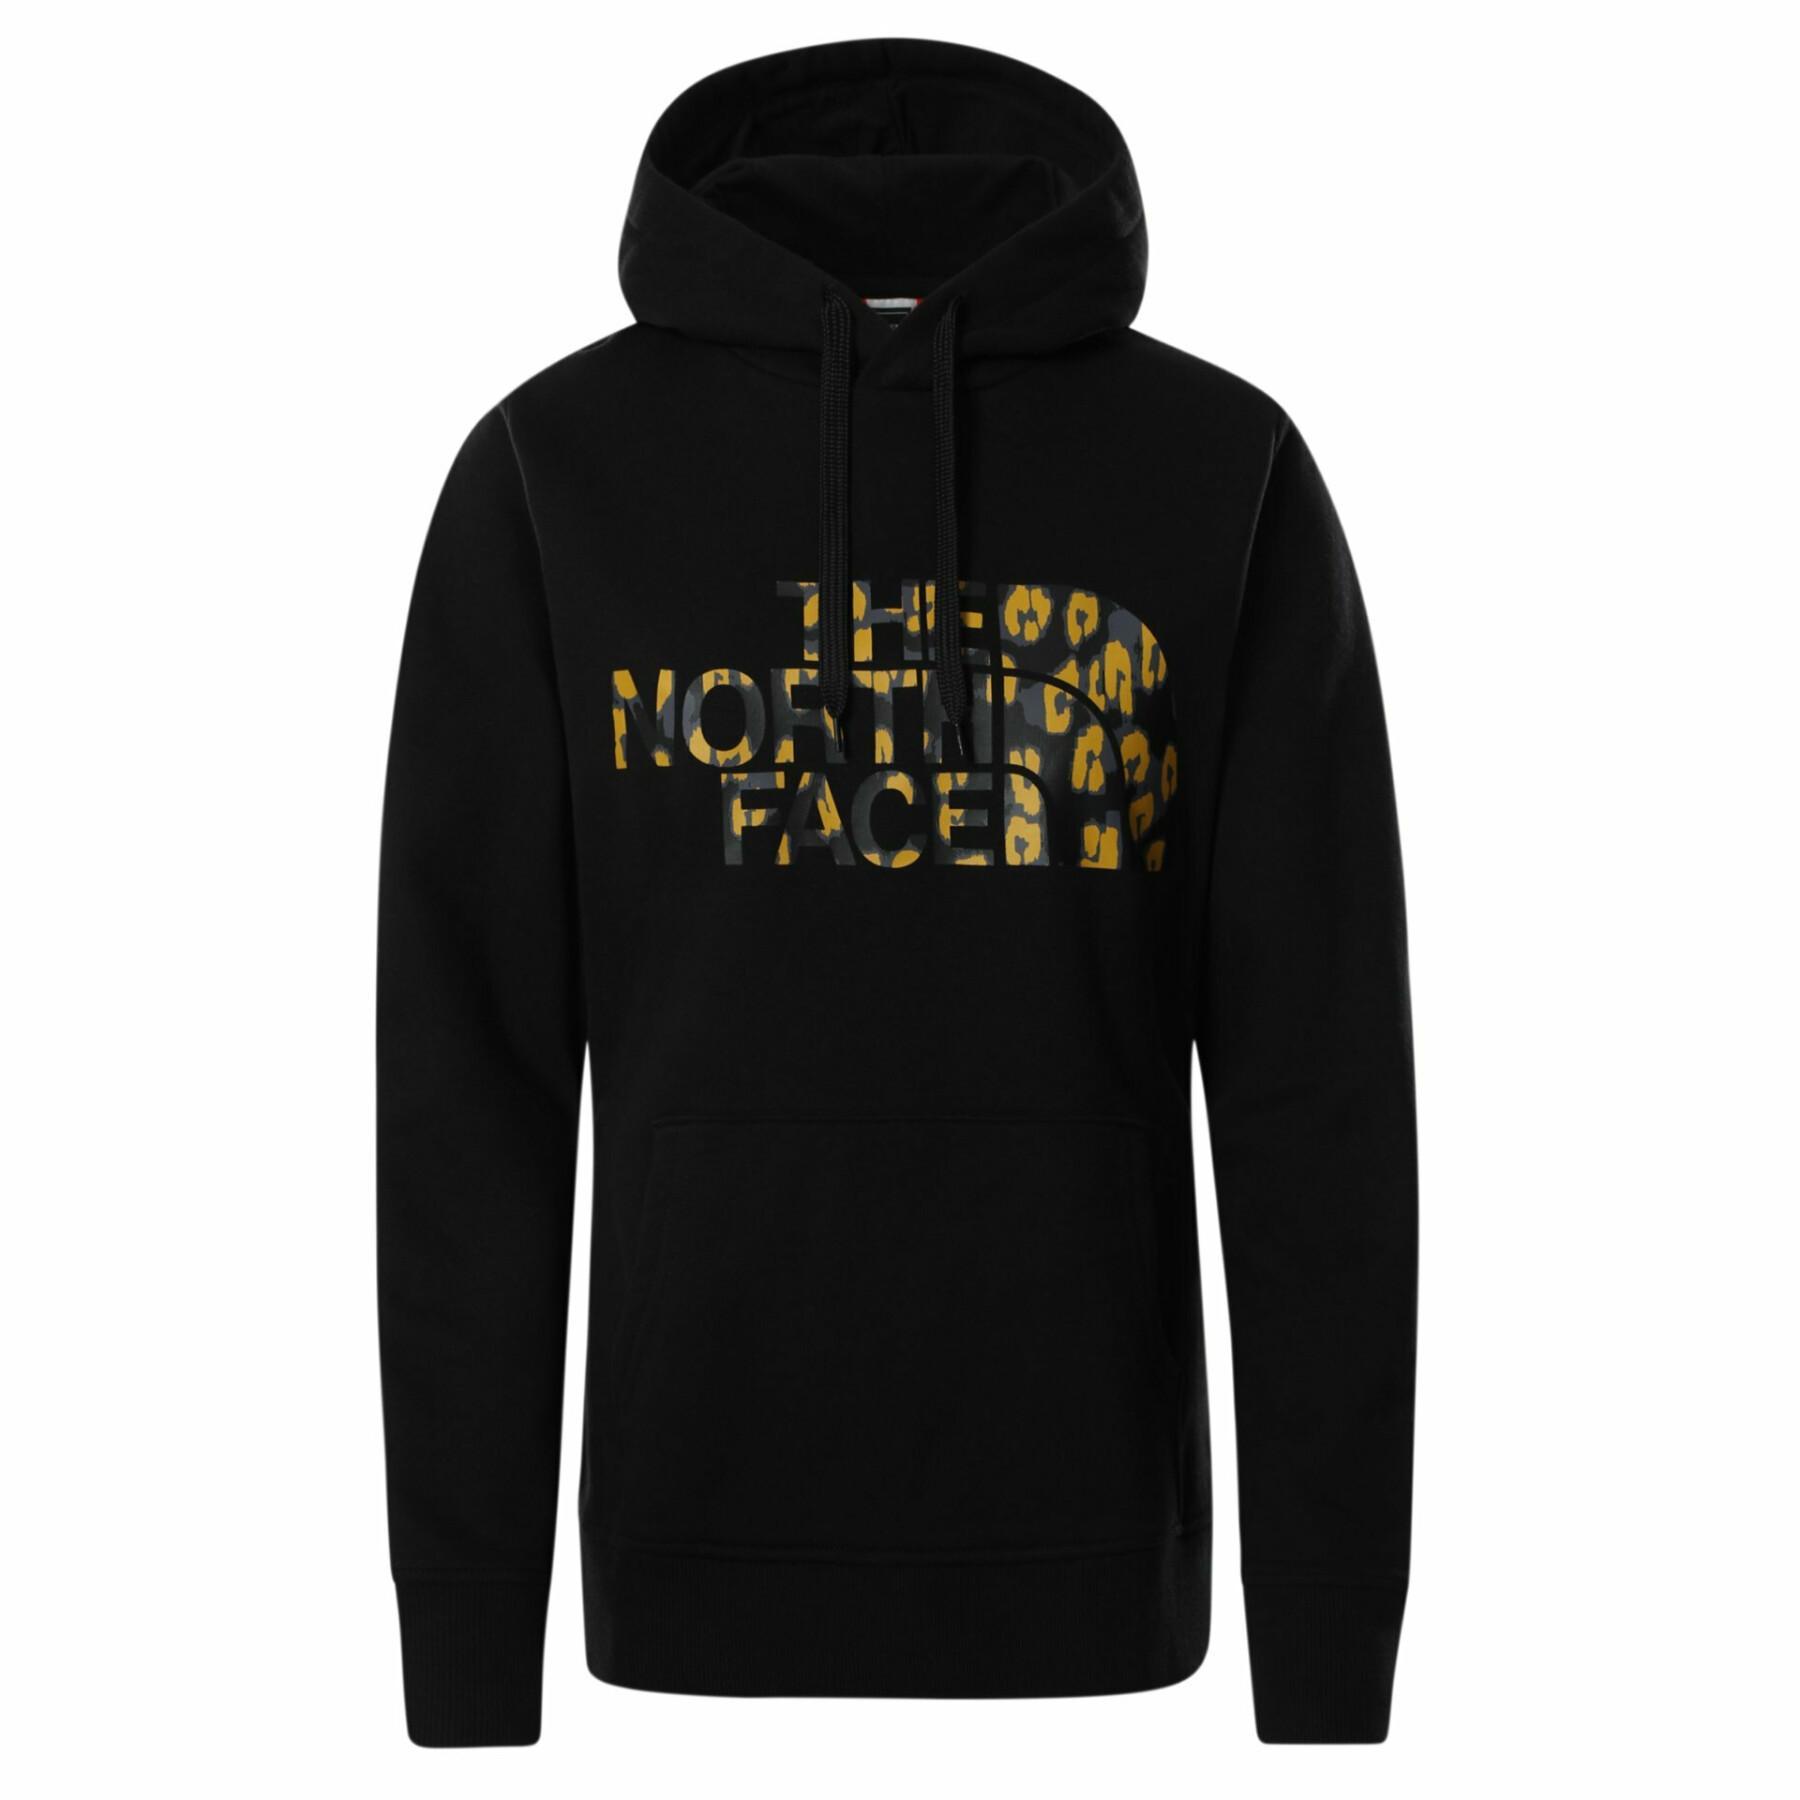 Damen-Sweatshirt The North Face Standard